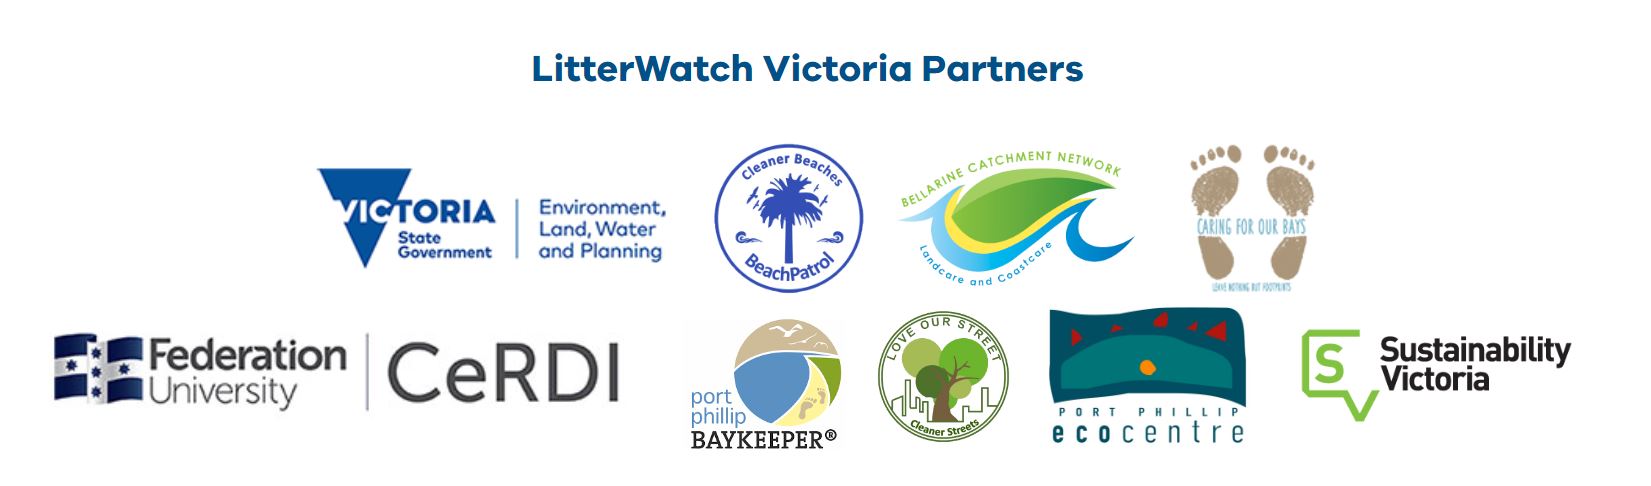 Image of LitterWatch Victoria partner logos.